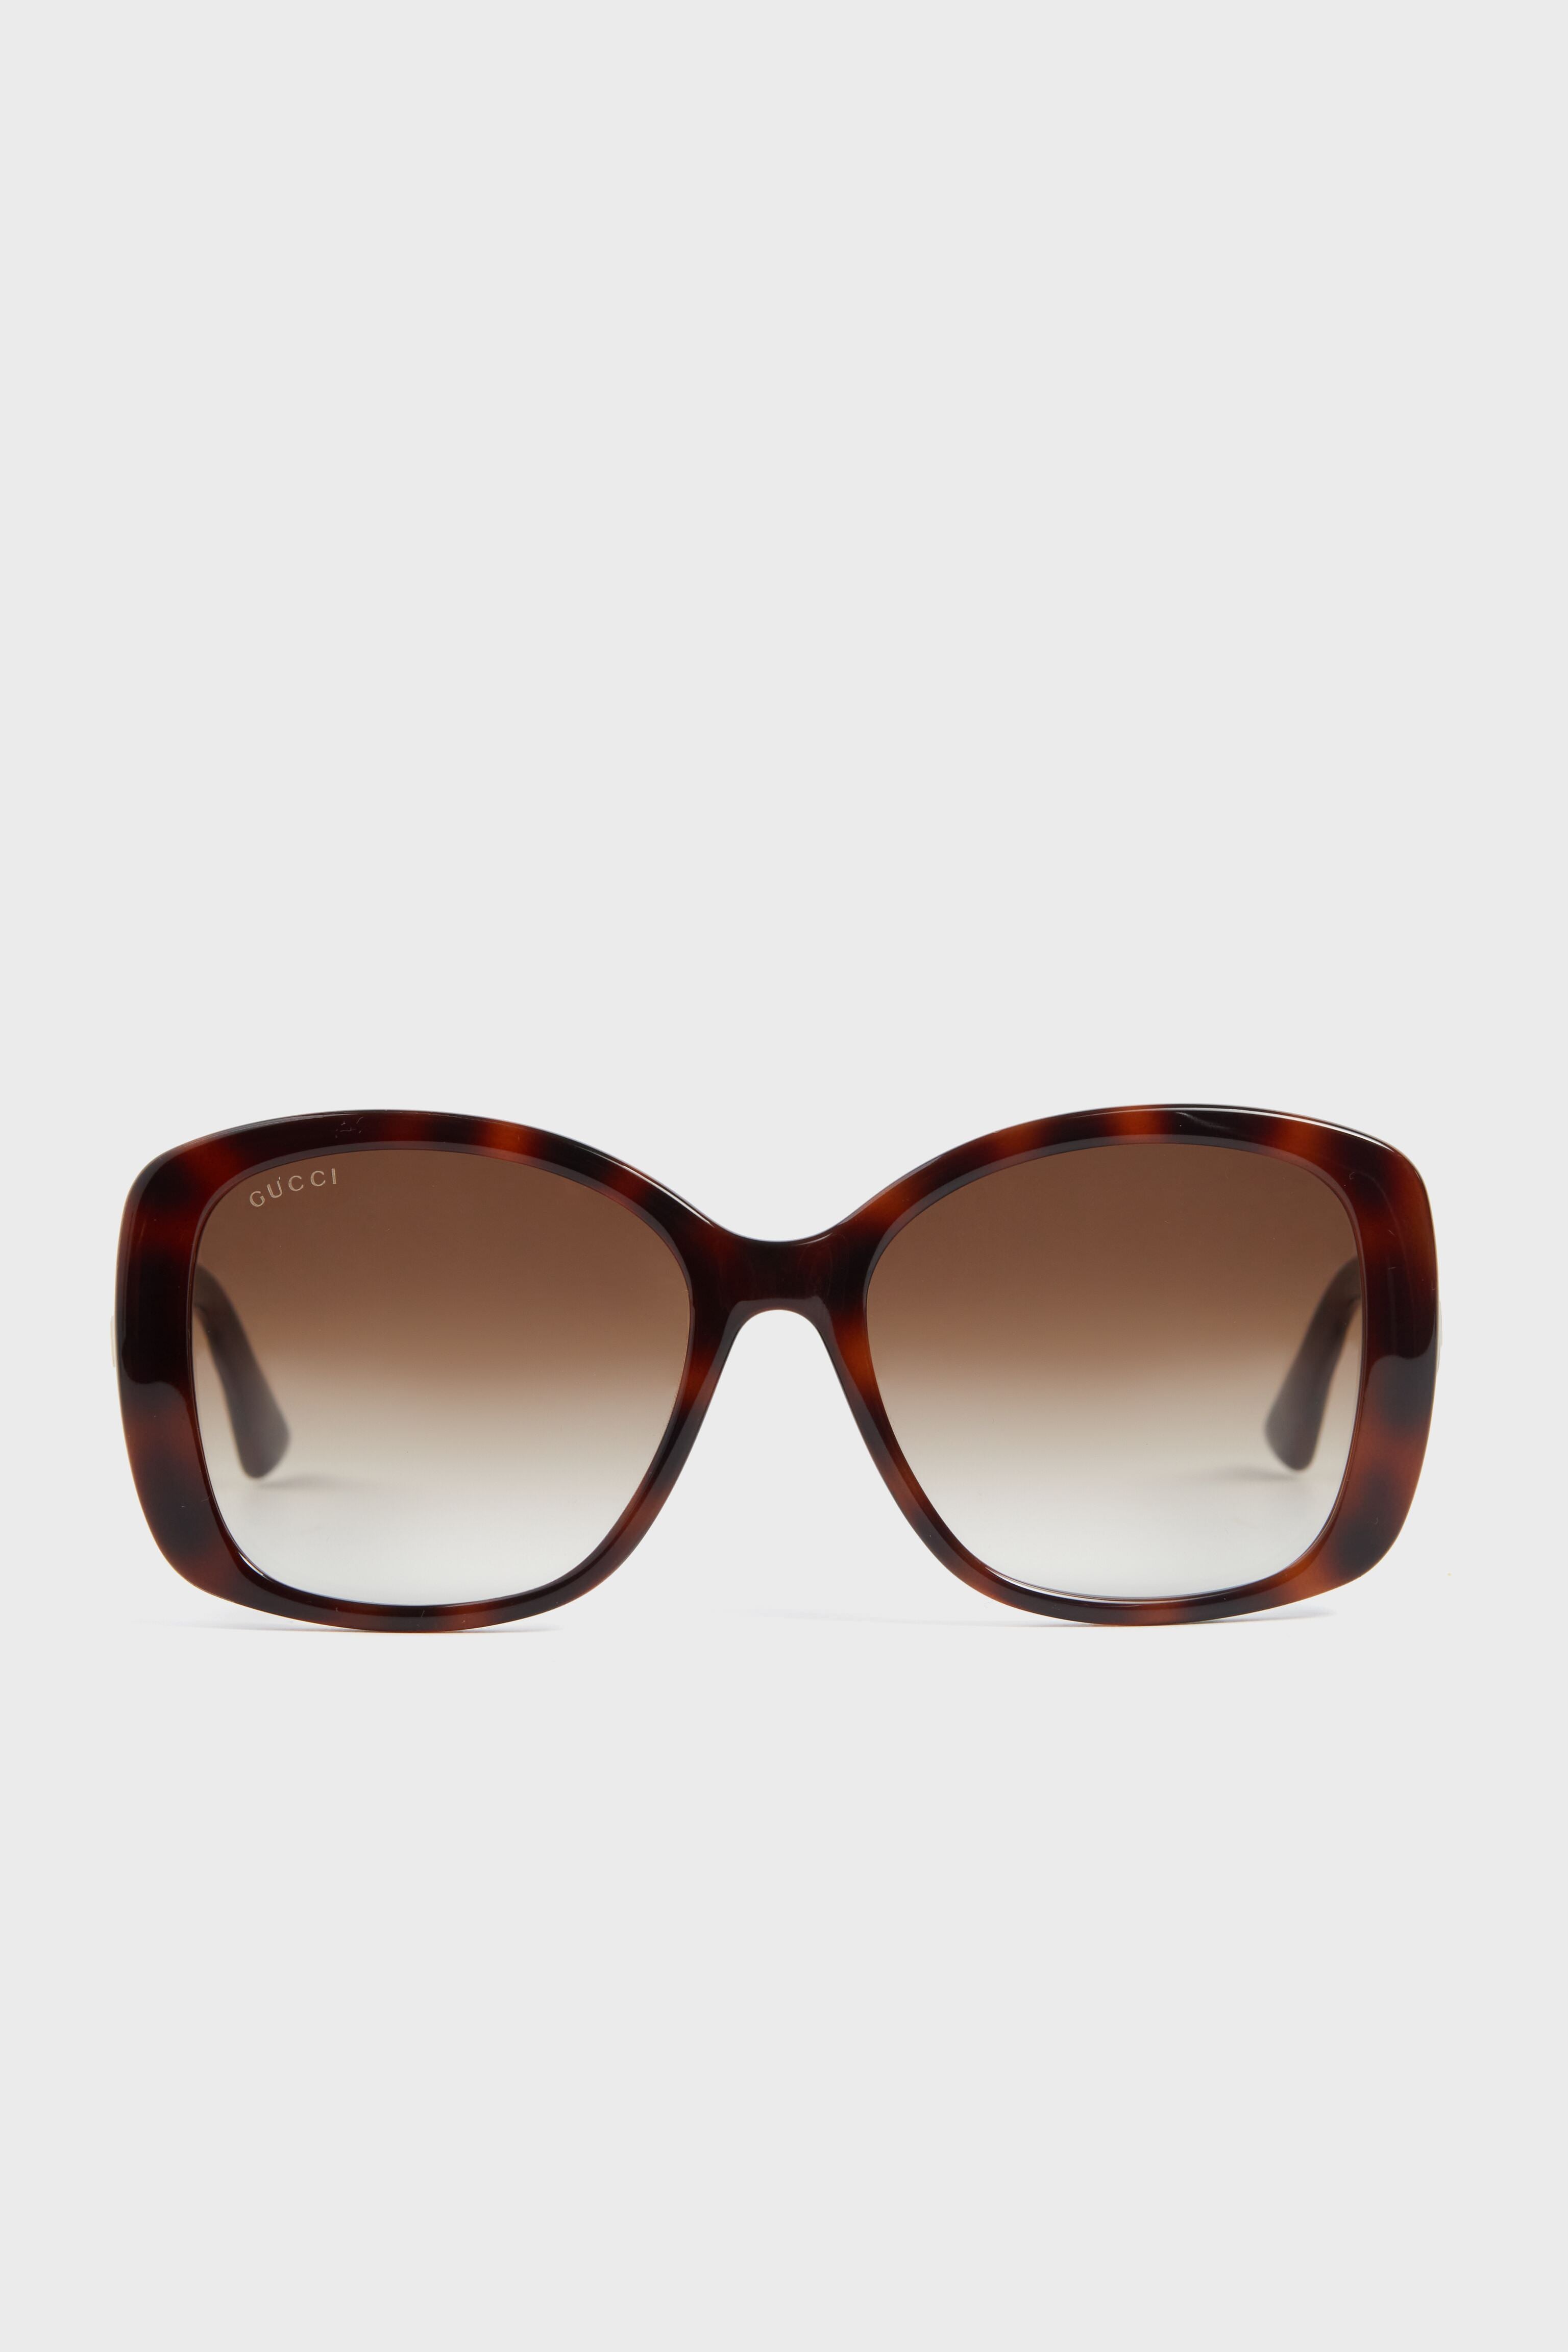 rectangular sunglasses for women: Top 5 Rectangular Sunglasses for Women to  Elevate Your Look - The Economic Times